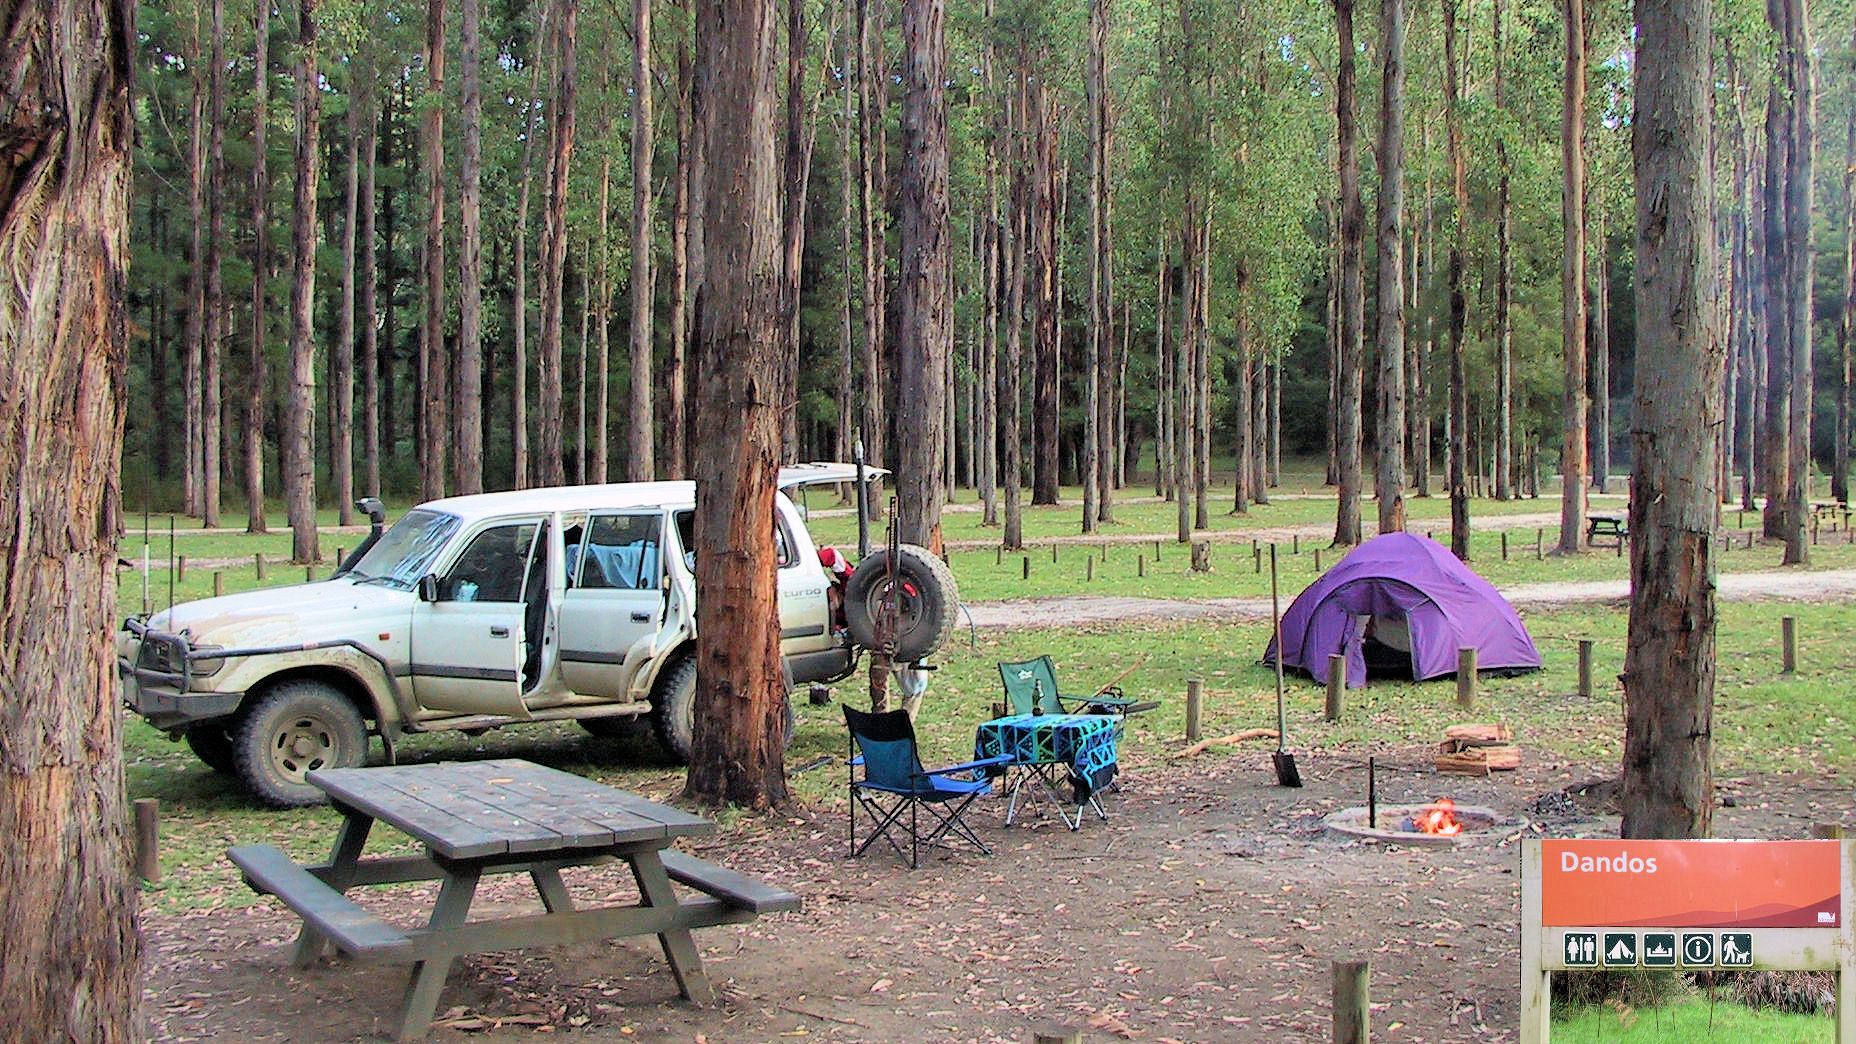 Dandos Campground